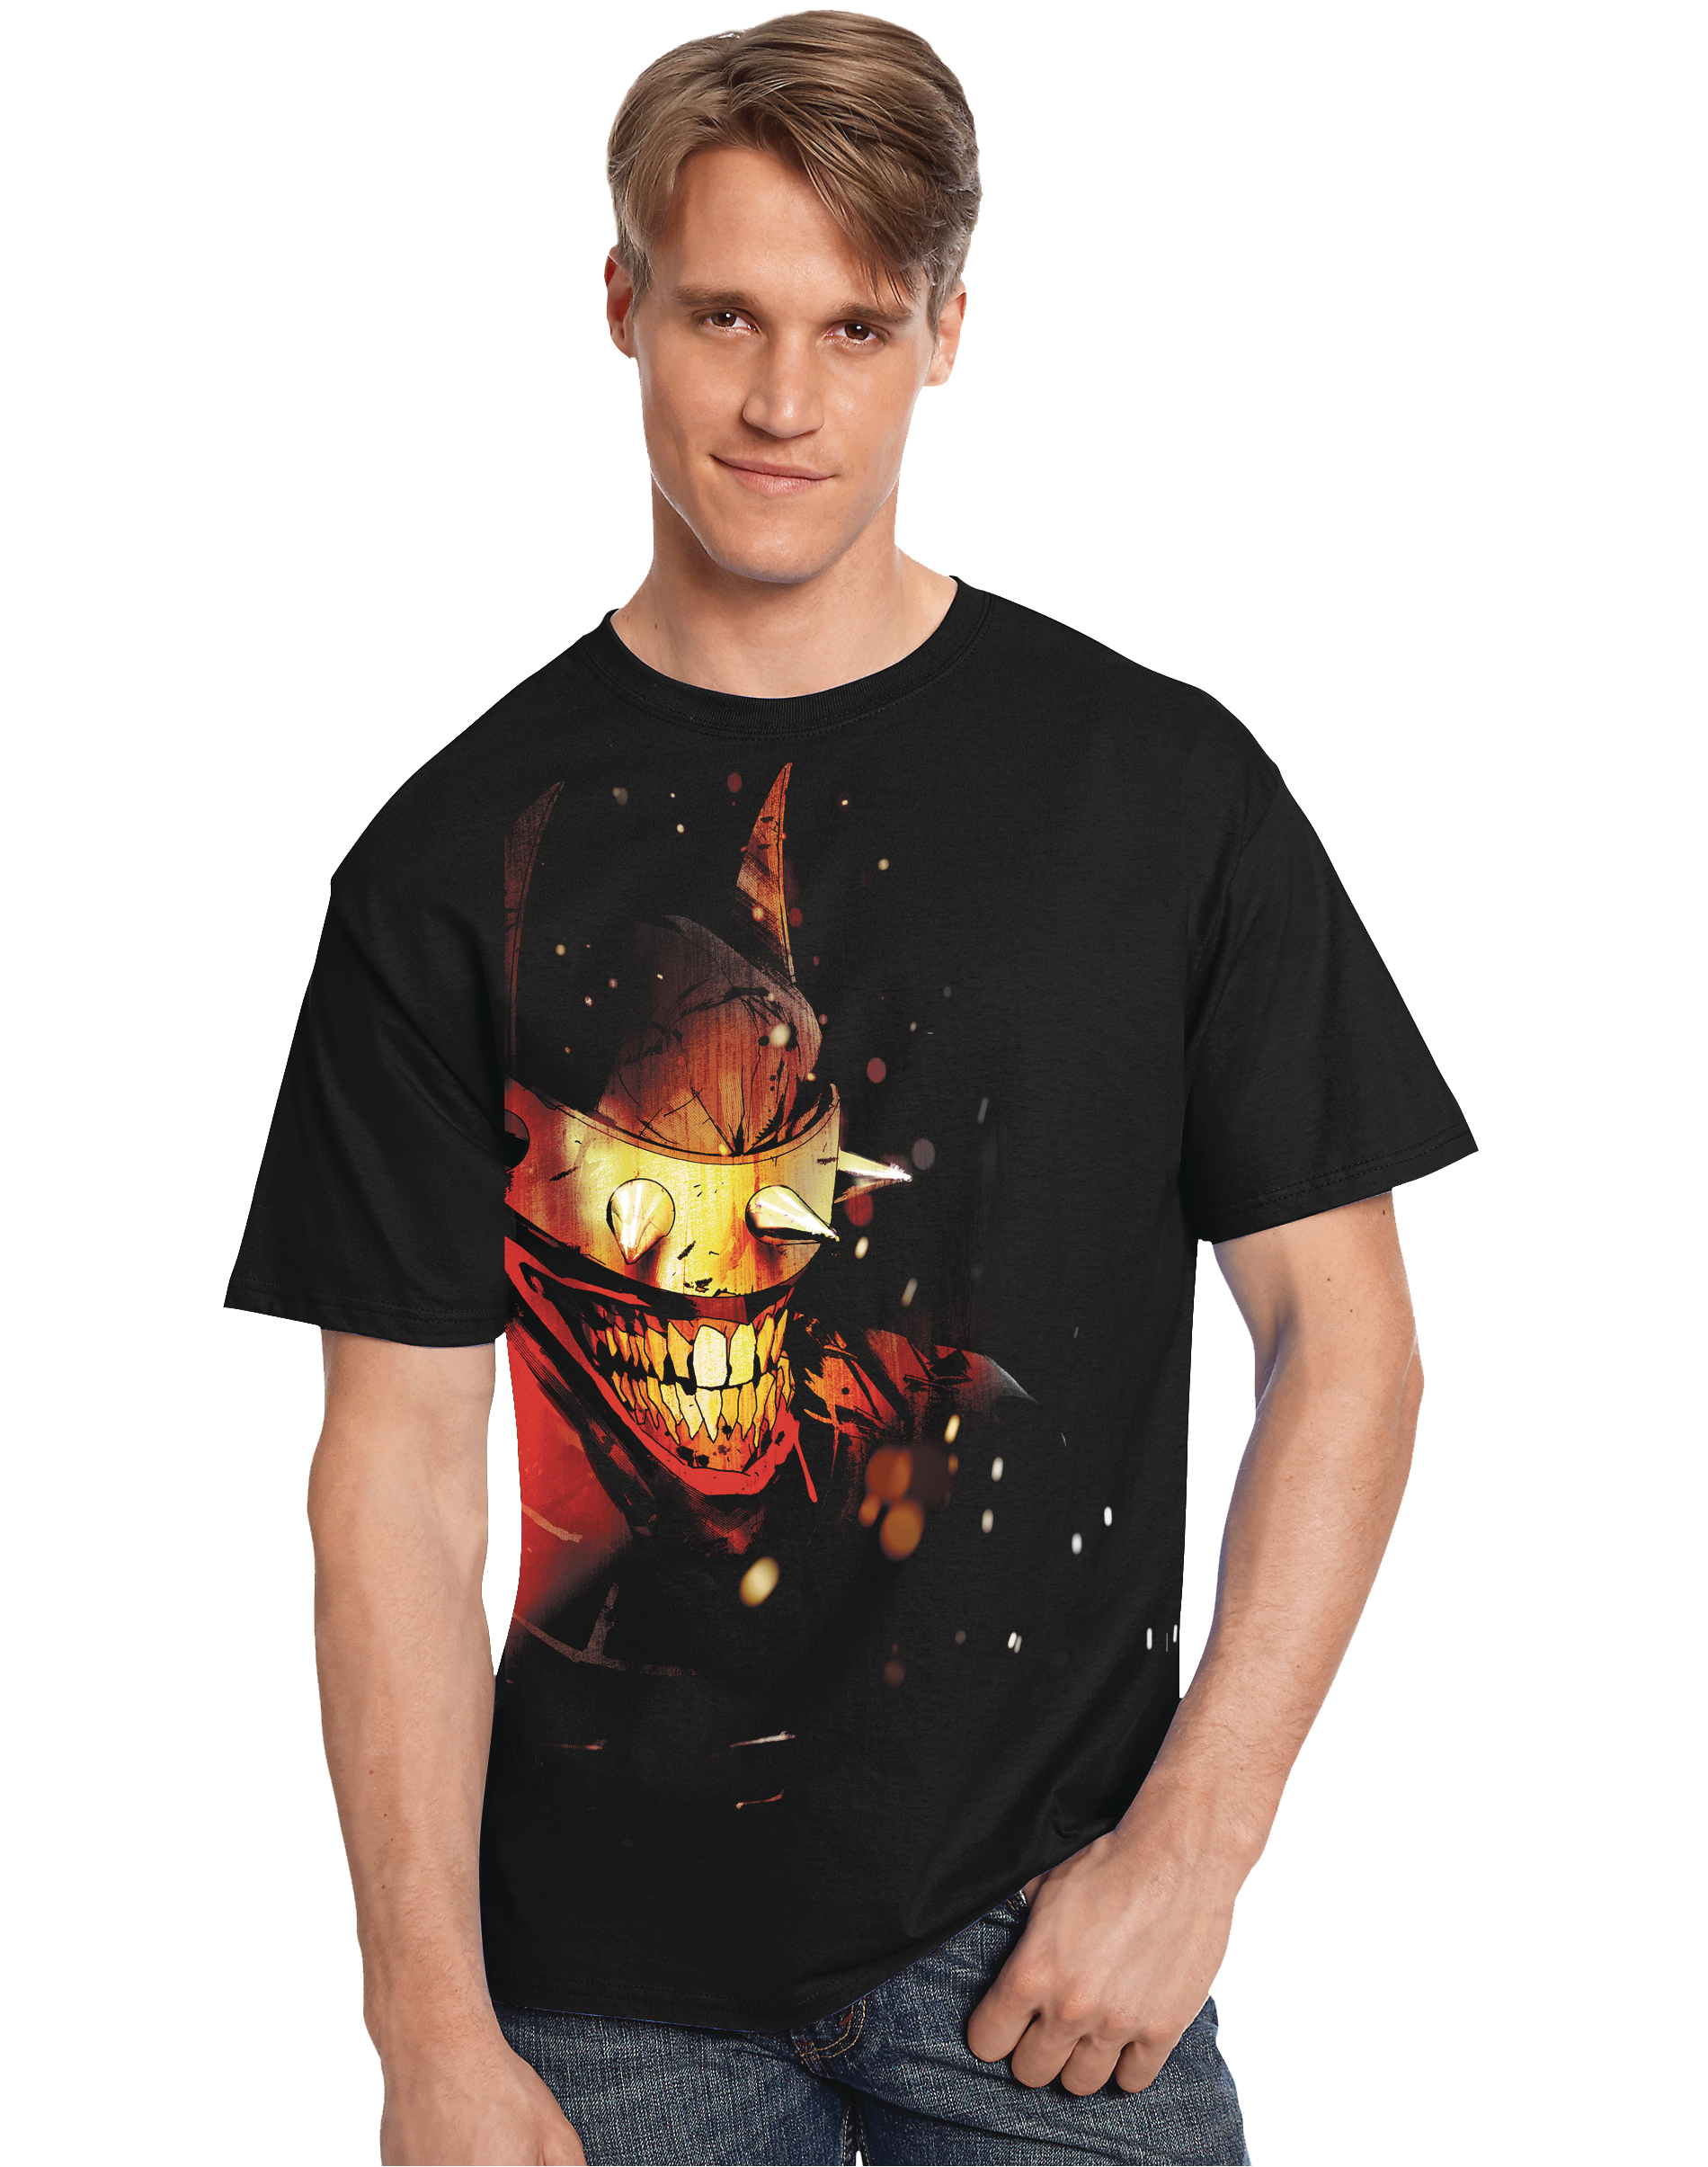 dark nights metal t shirt